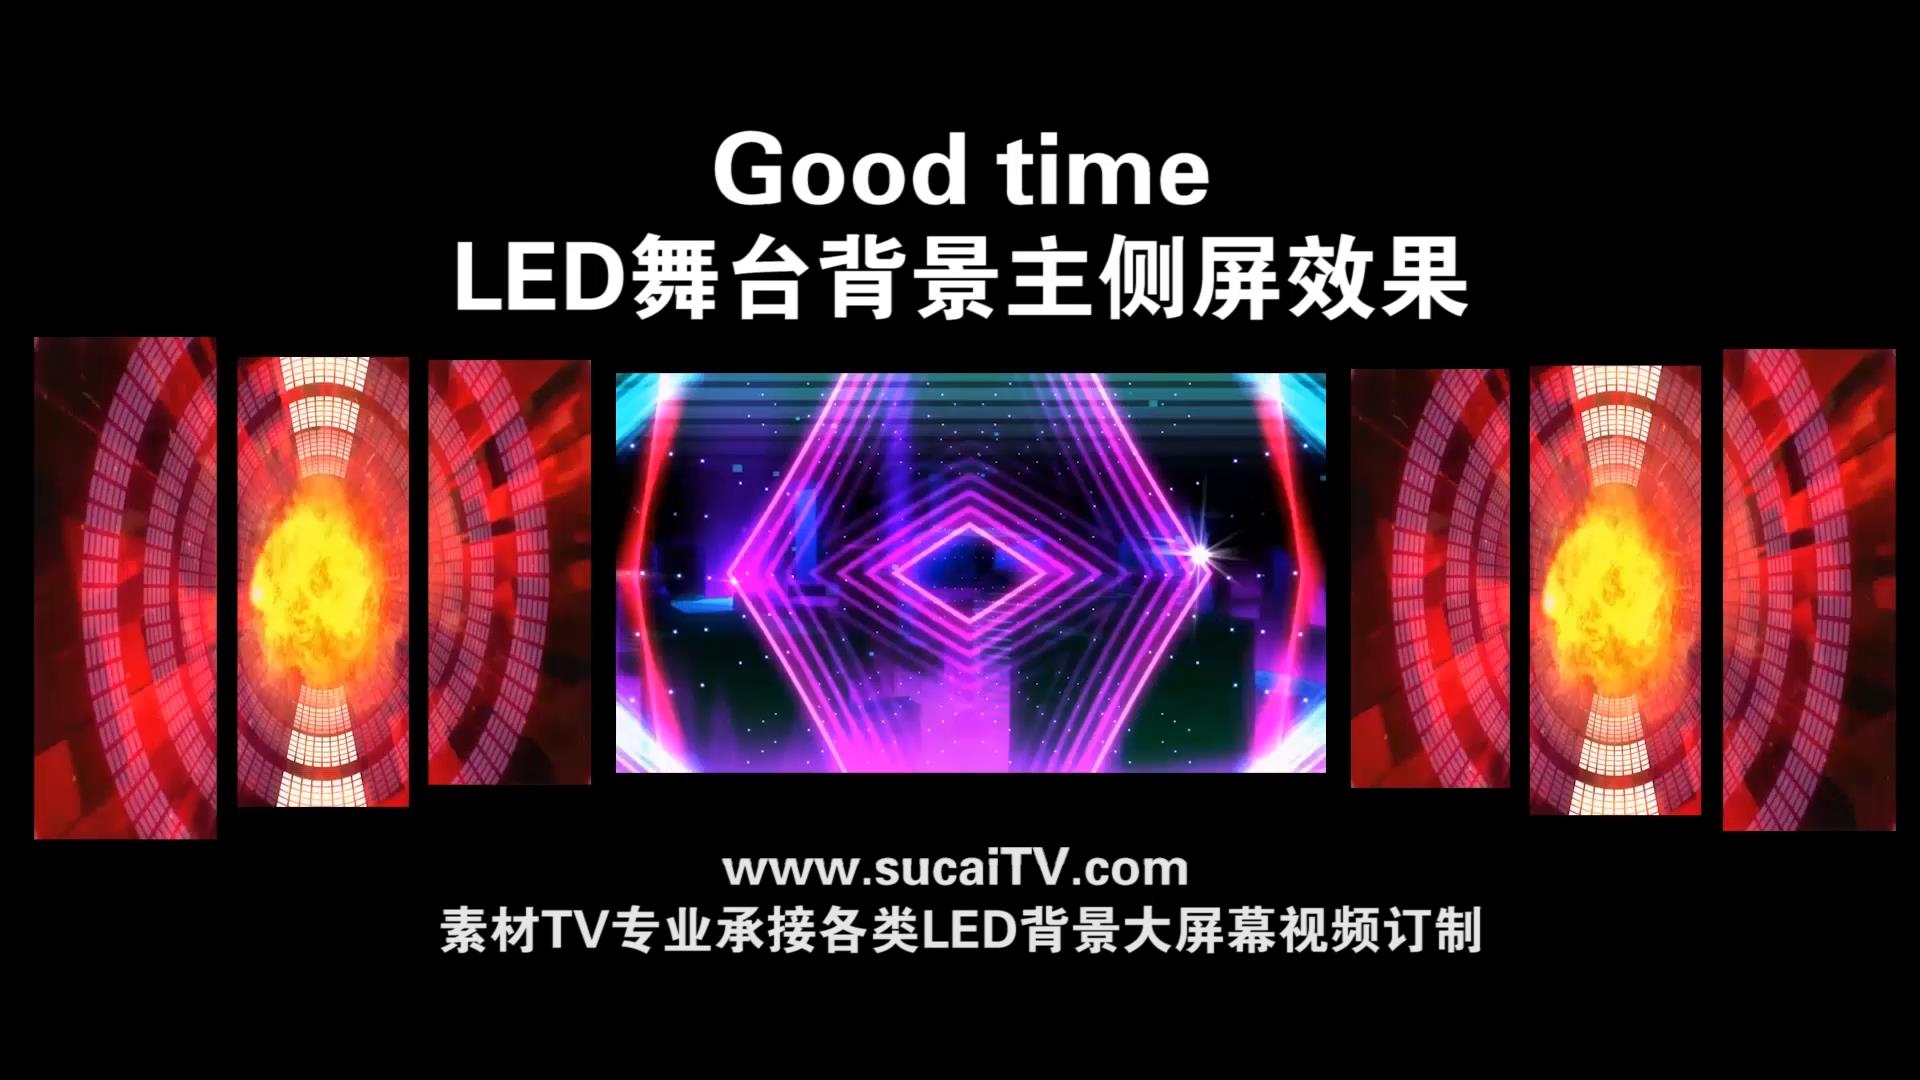 Good time 动感炫酷流行街舞舞台演出LED背景大屏幕视频素材TV